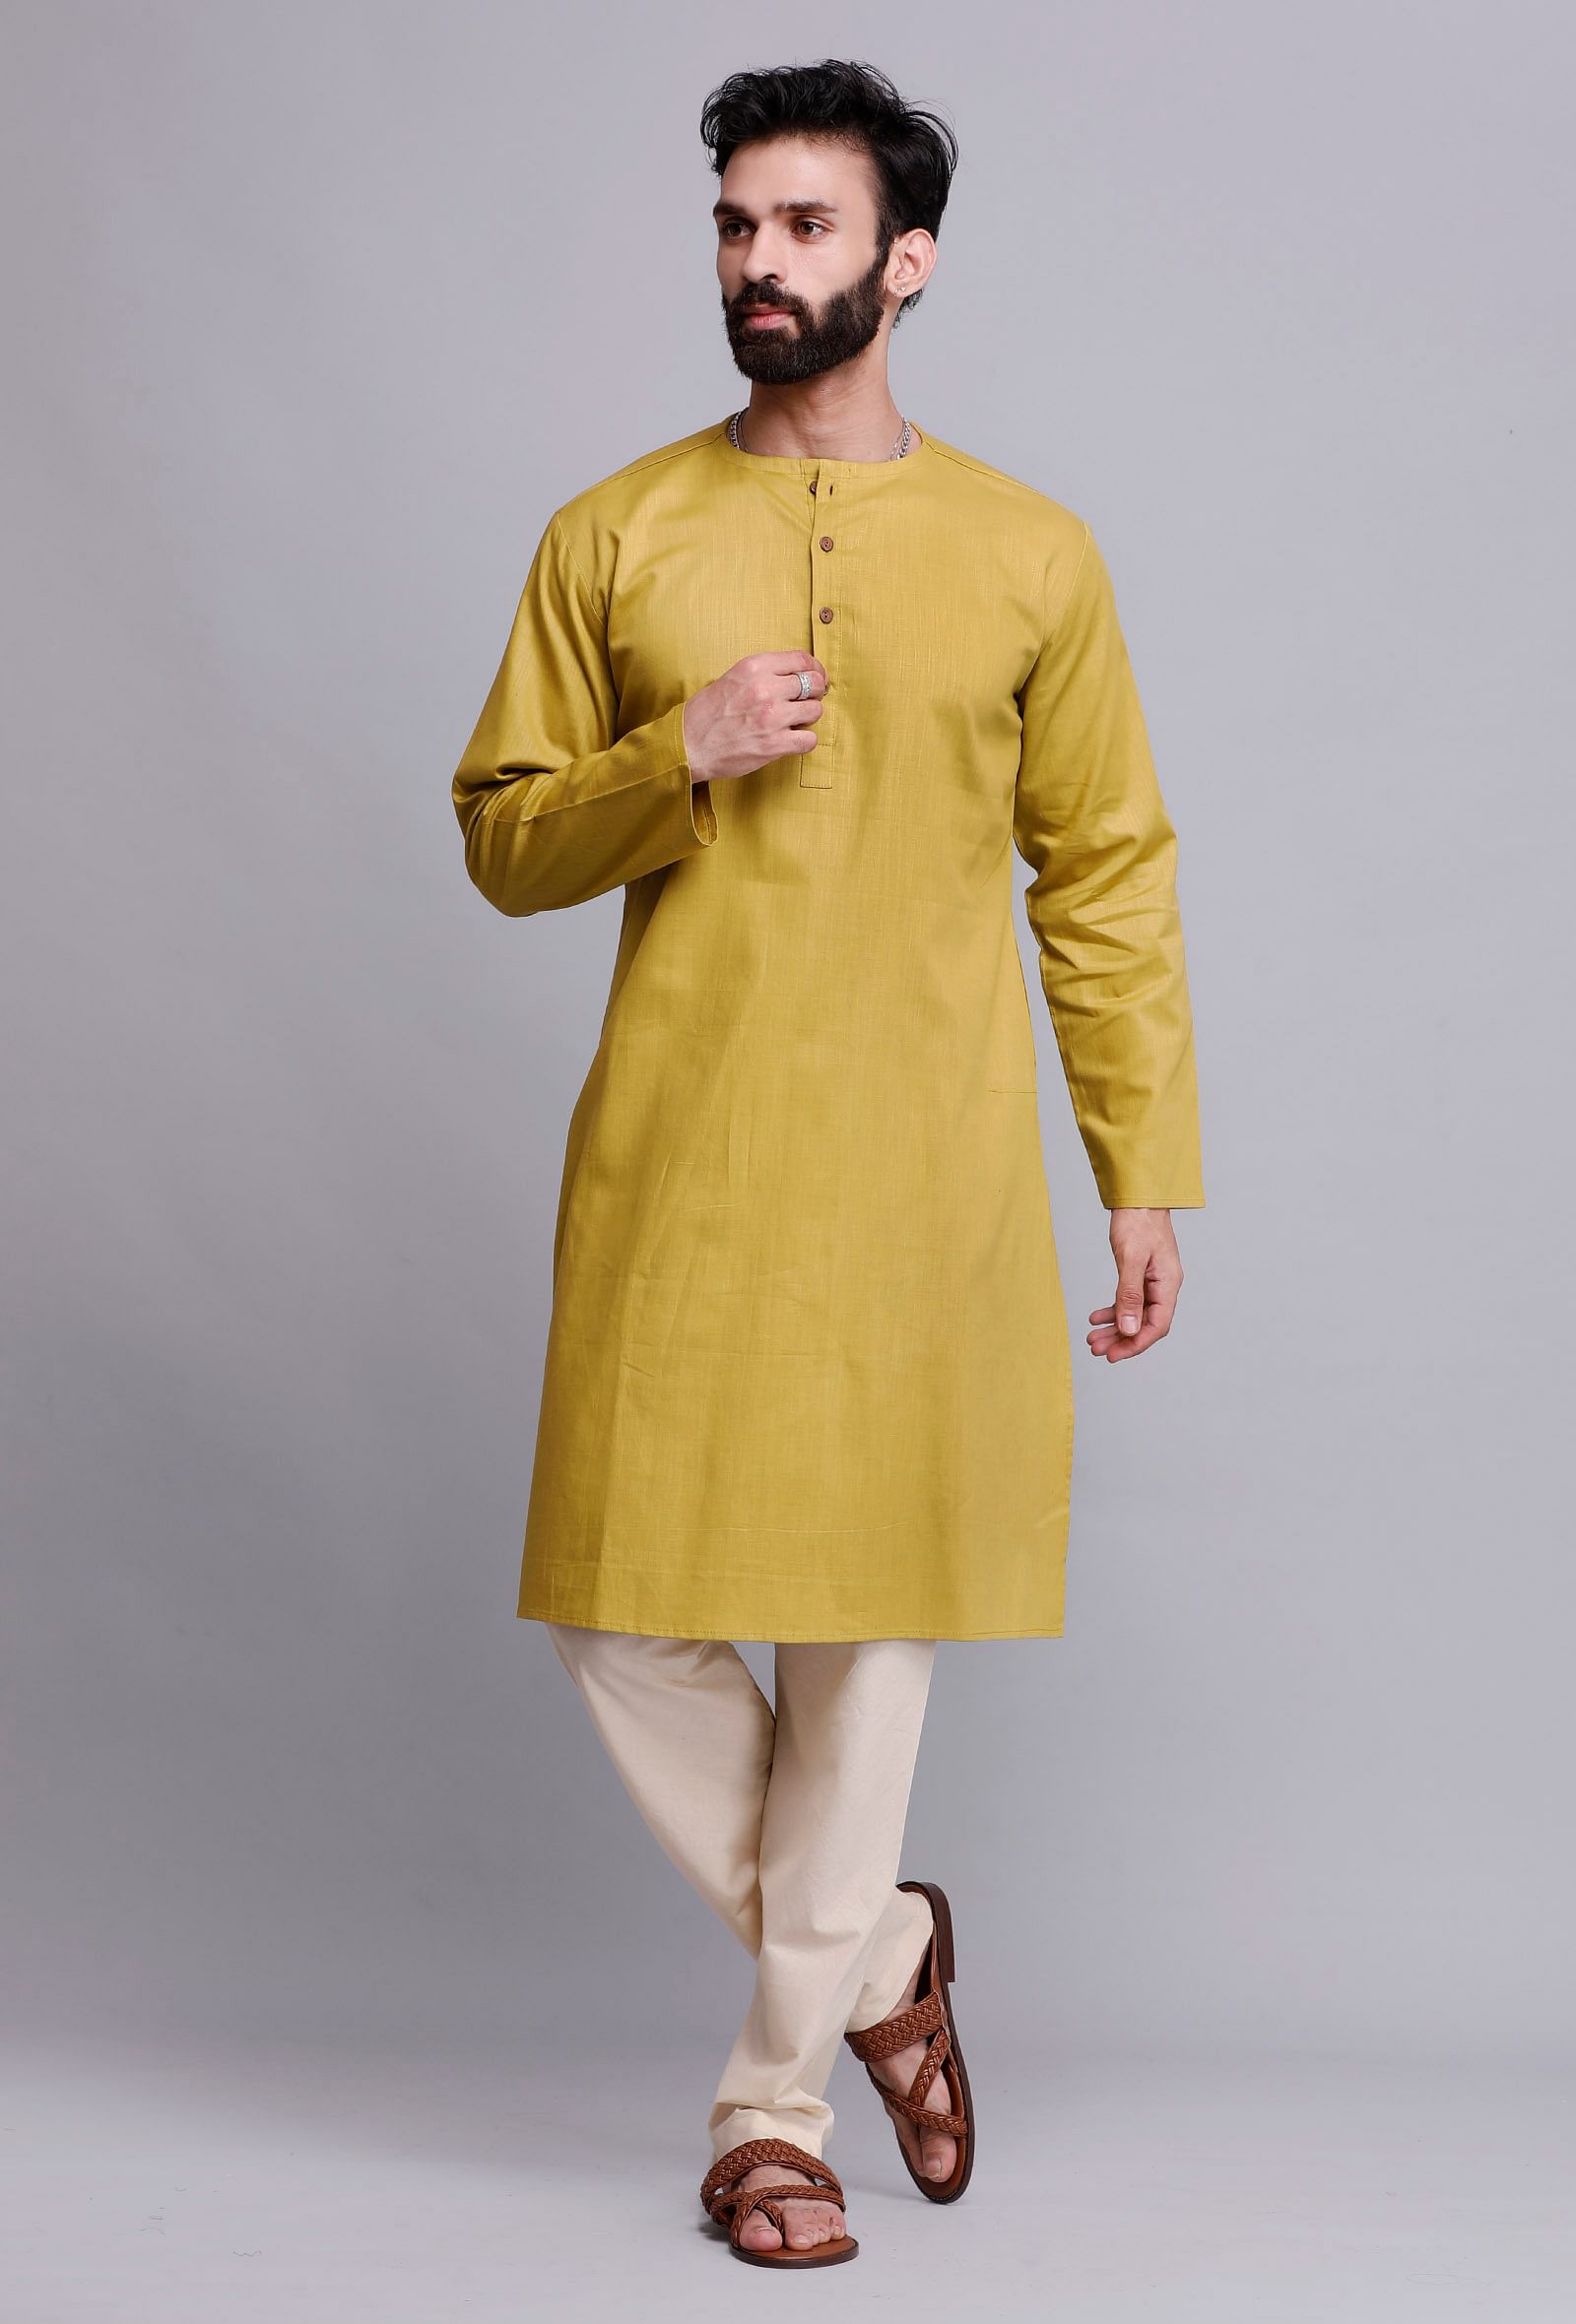 Set of 2: Gold Yellow Cotton Kurta Pajama Set